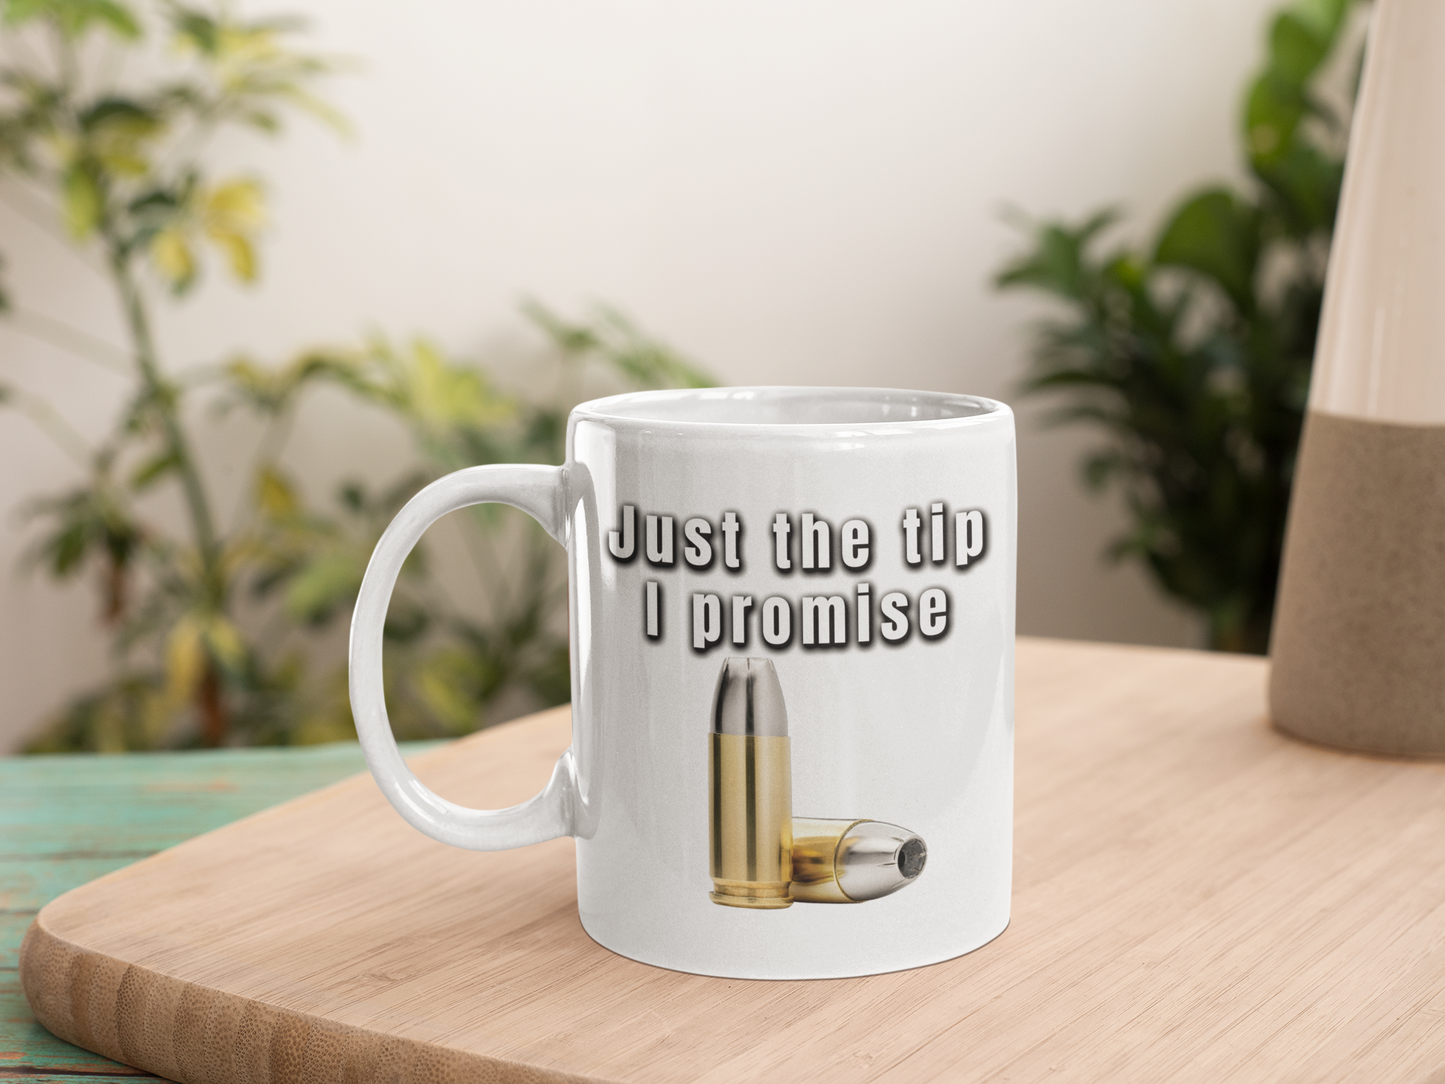 Just the tip, I promise. Mug.